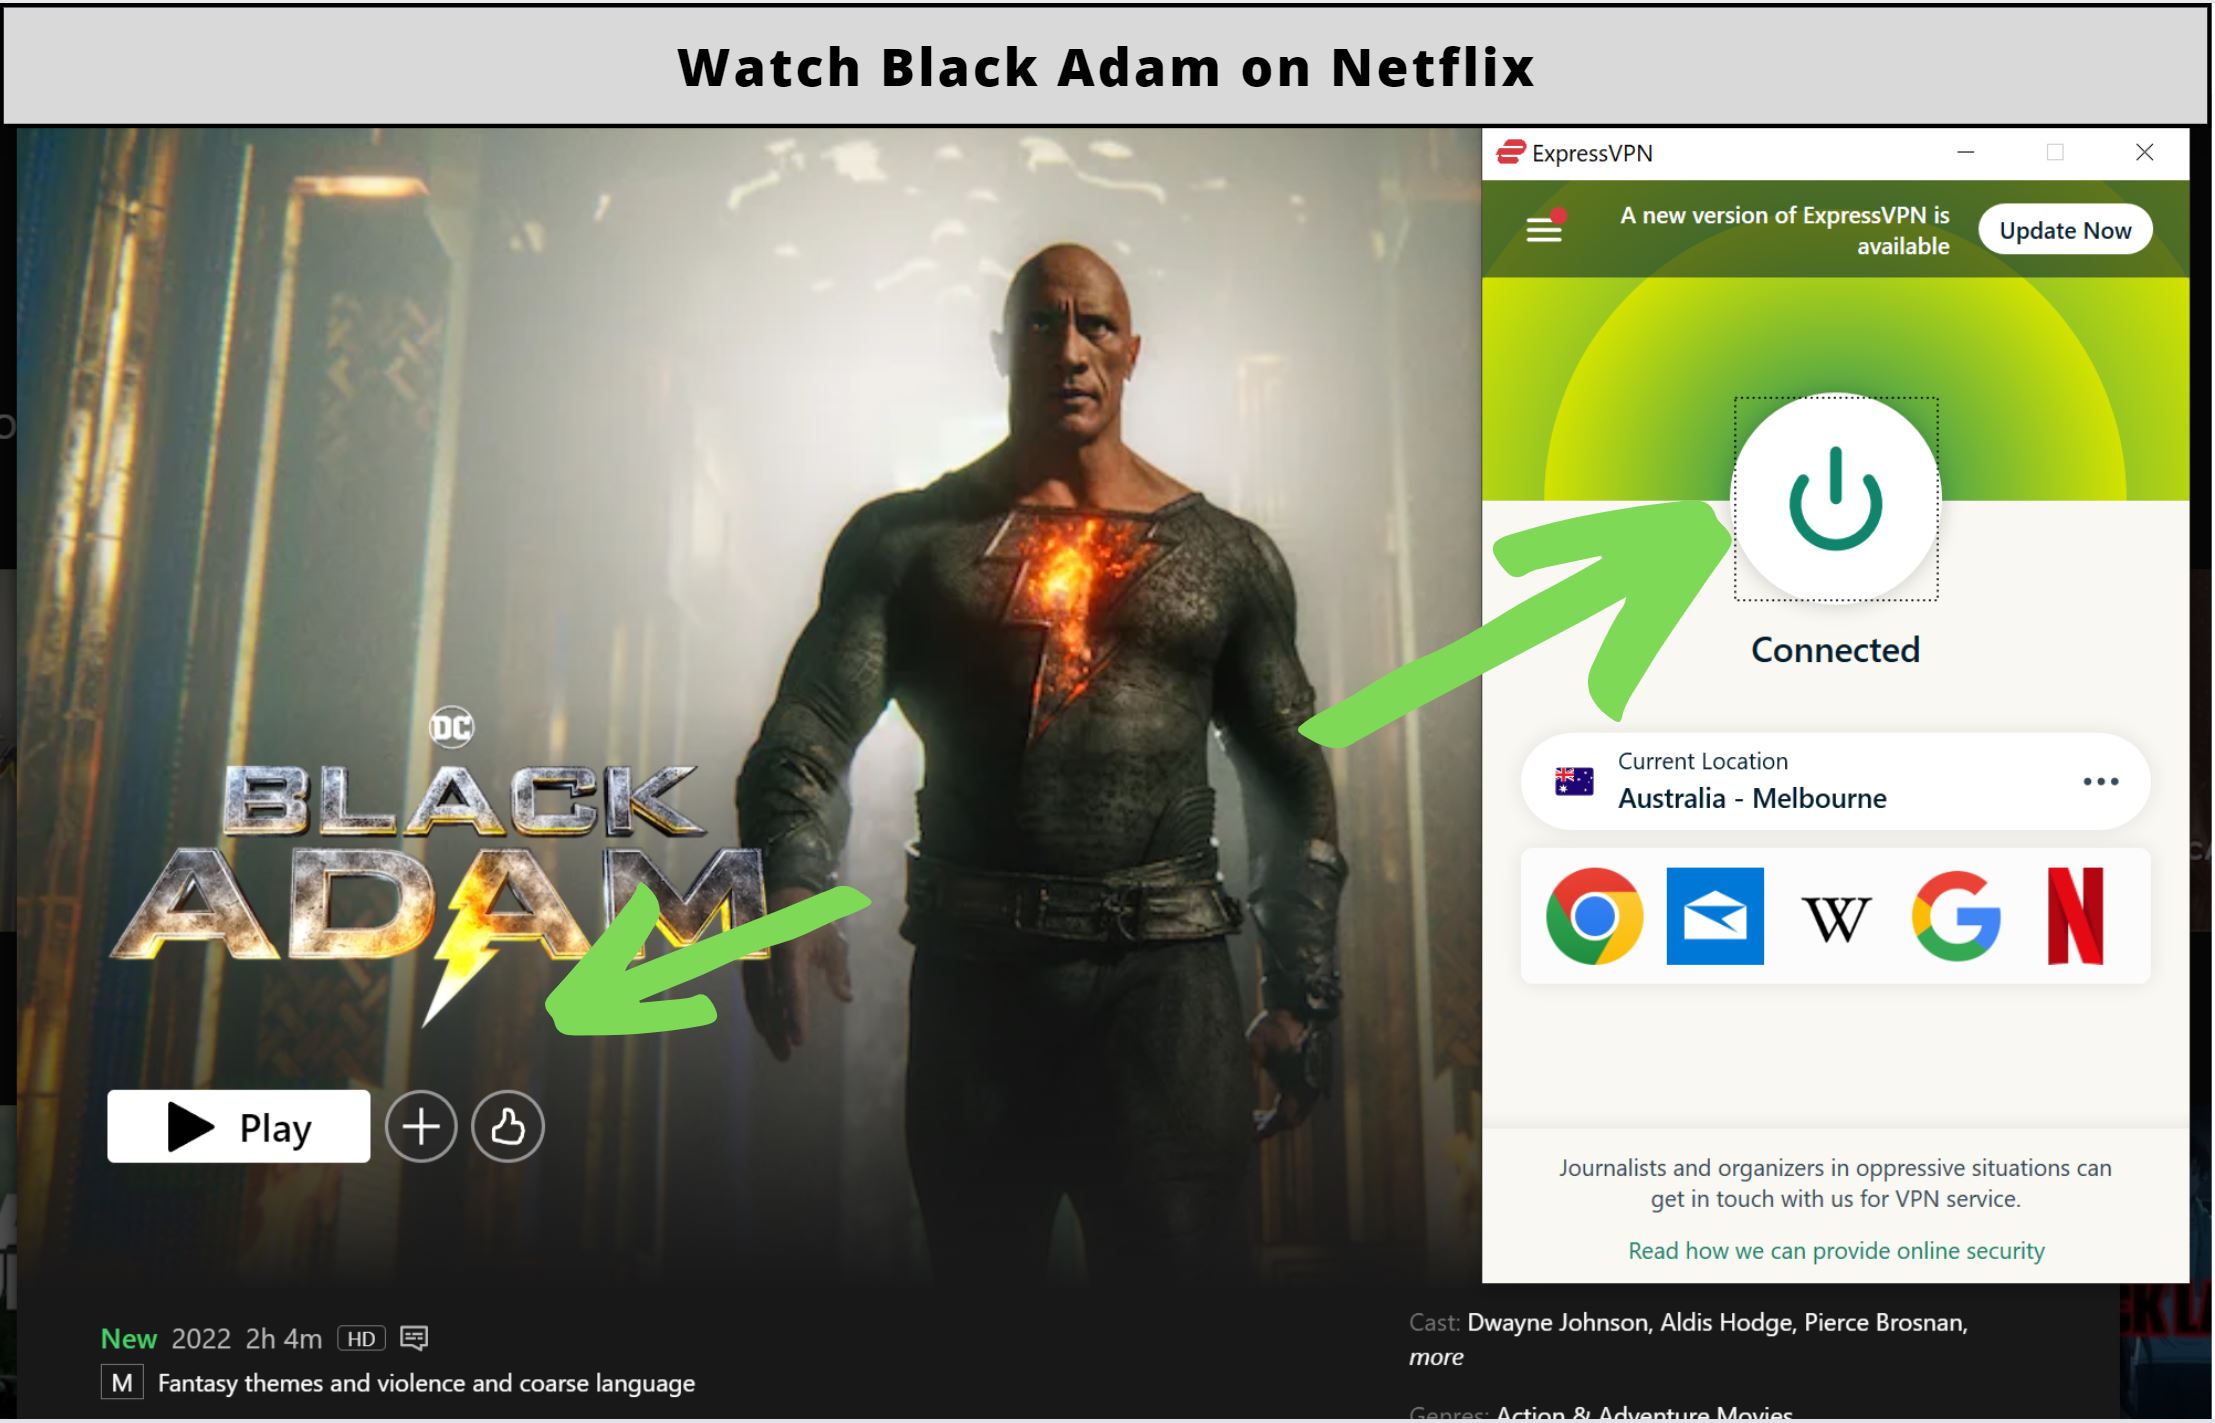 How to watch Black Adam on Netflix in 2023?